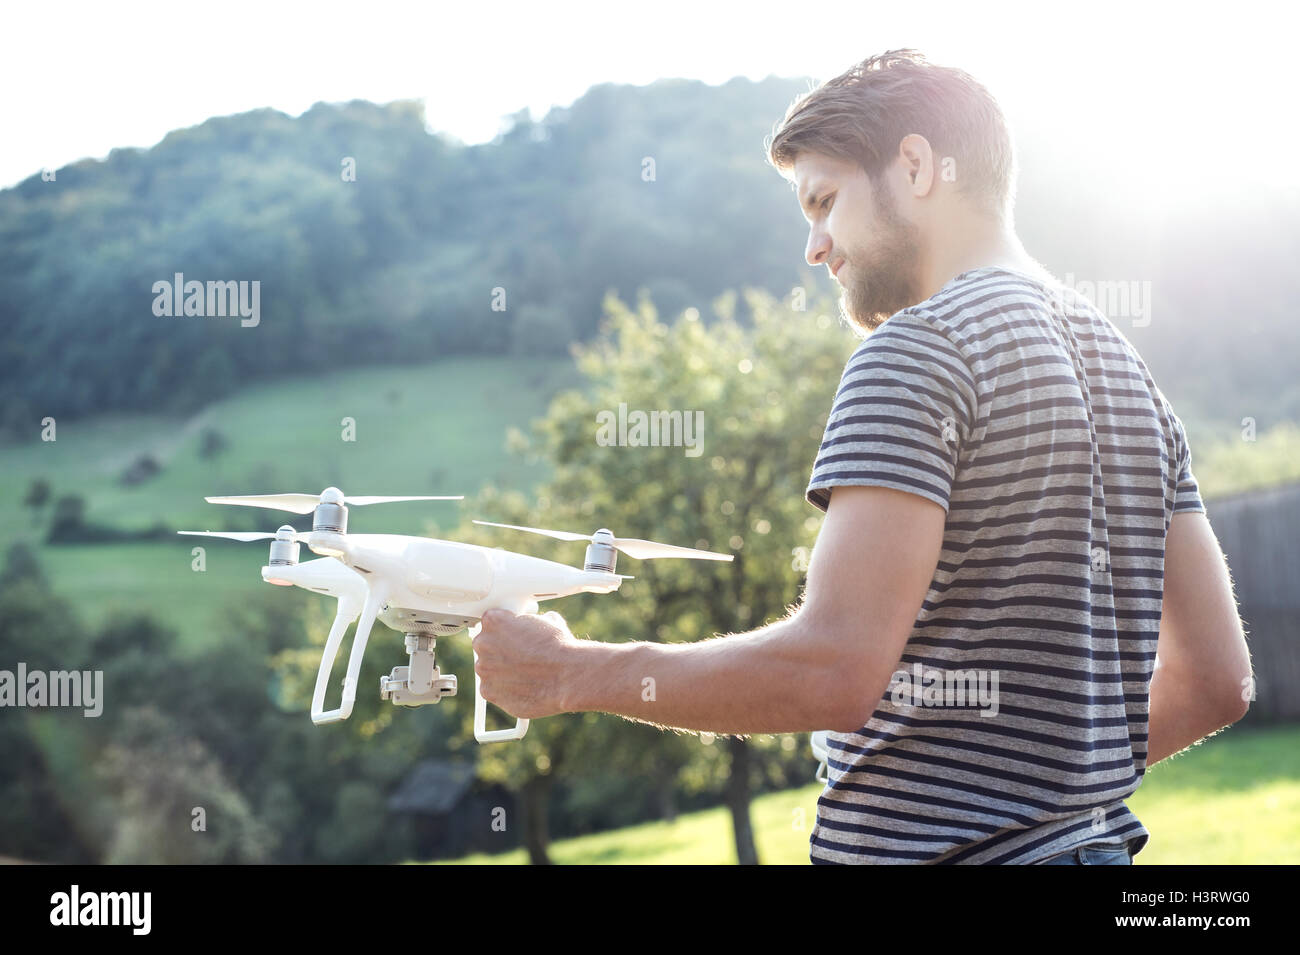 Junge Hipster Mann Betrieb Drohne. Sonnigen grünen Natur. Stockfoto